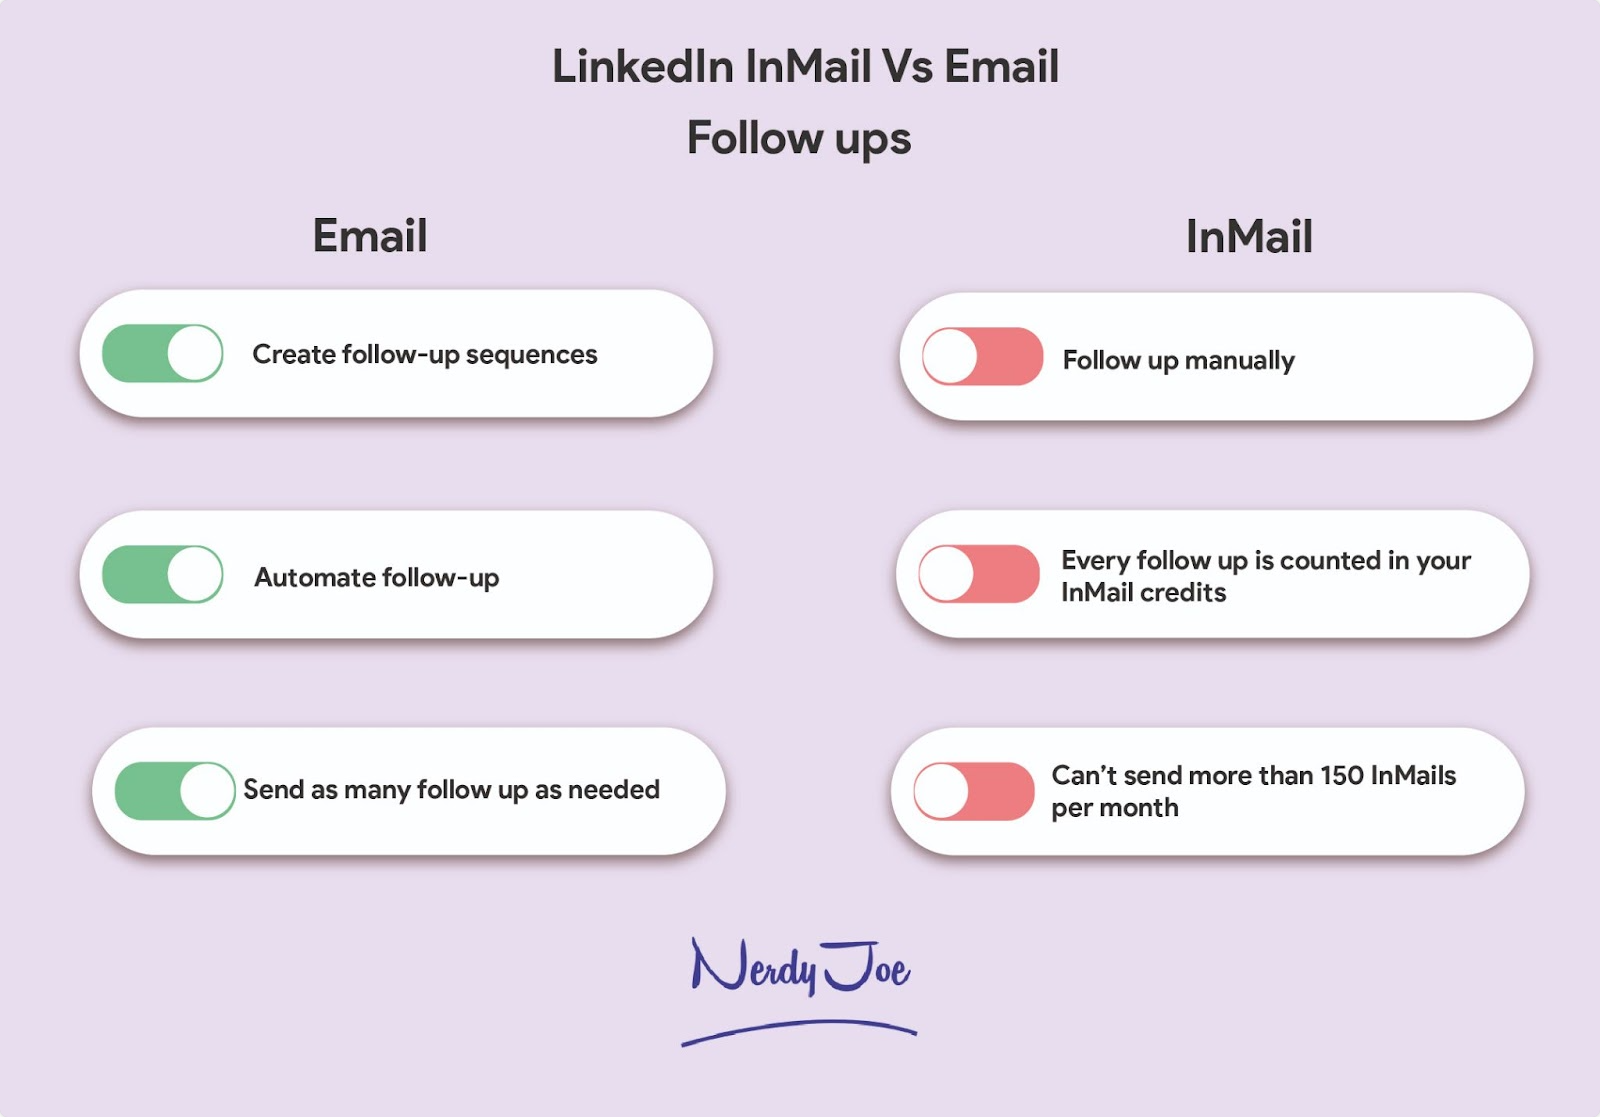 LinkedIn InMail vs Email: Follow ups